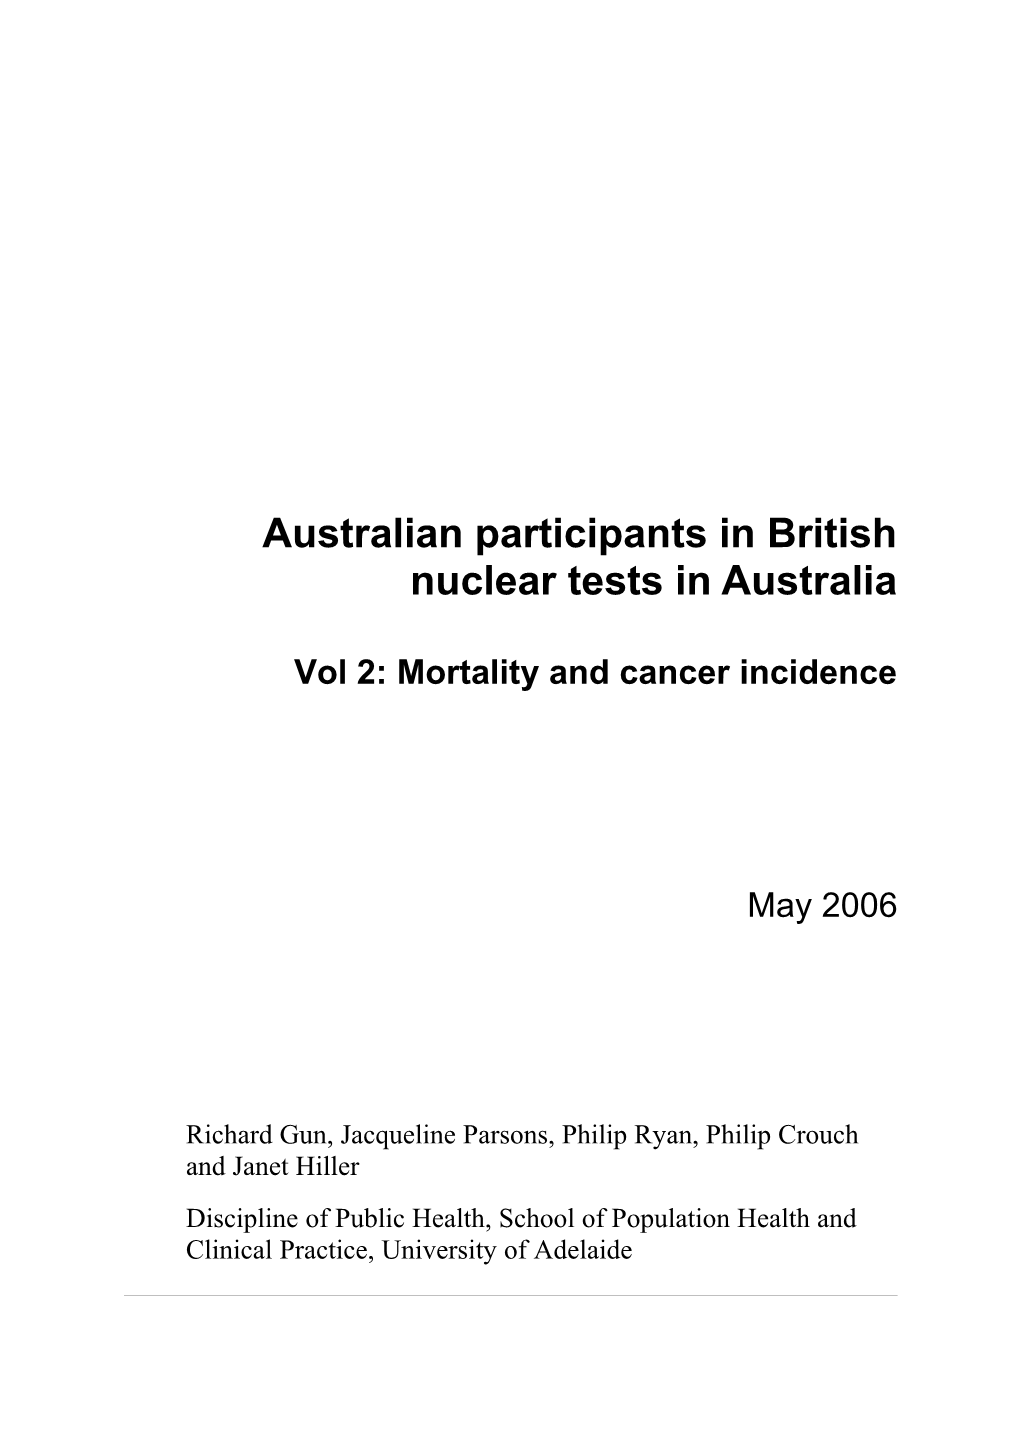 Australian Participants in British Nuclear Tests in Australia